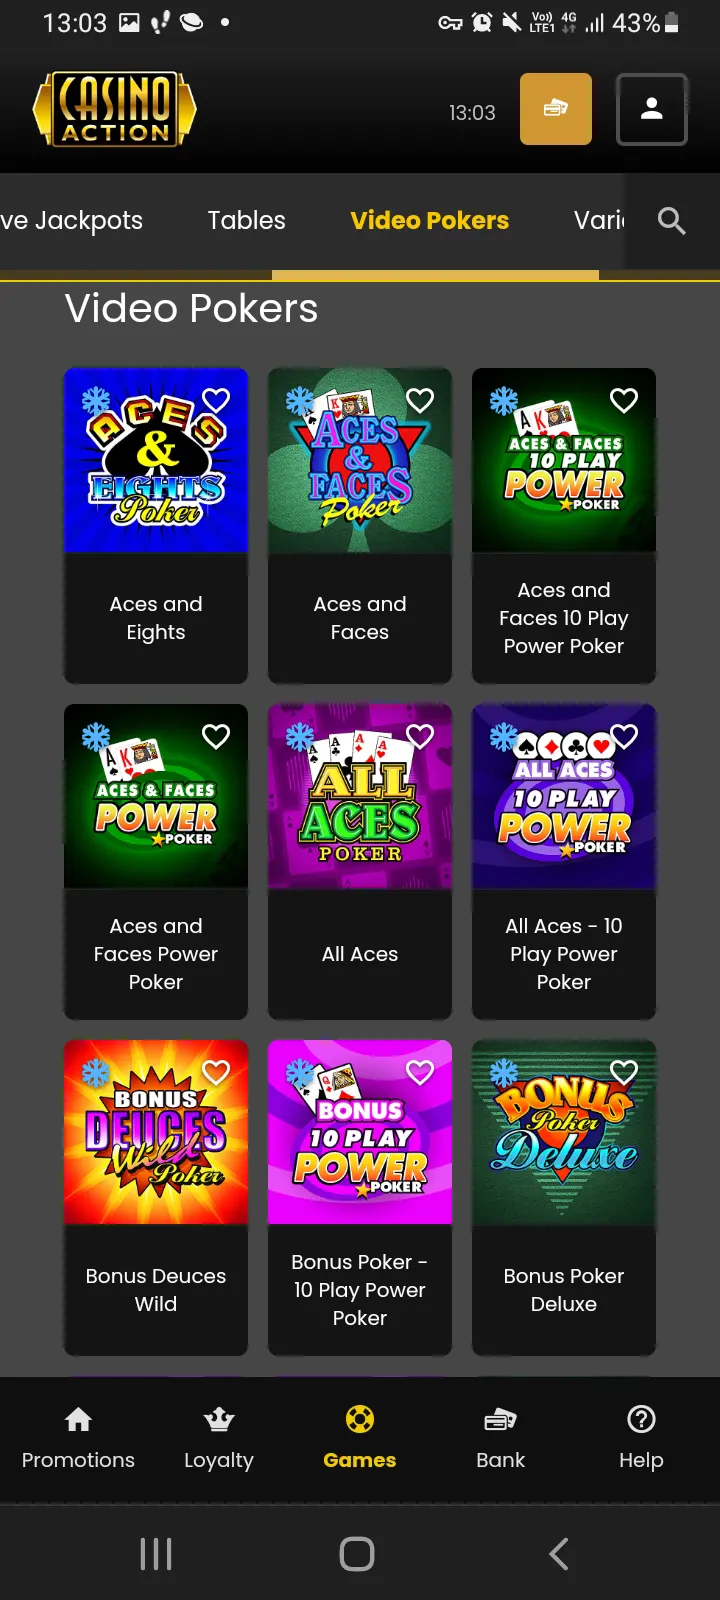 Casino Action app screenshot 5